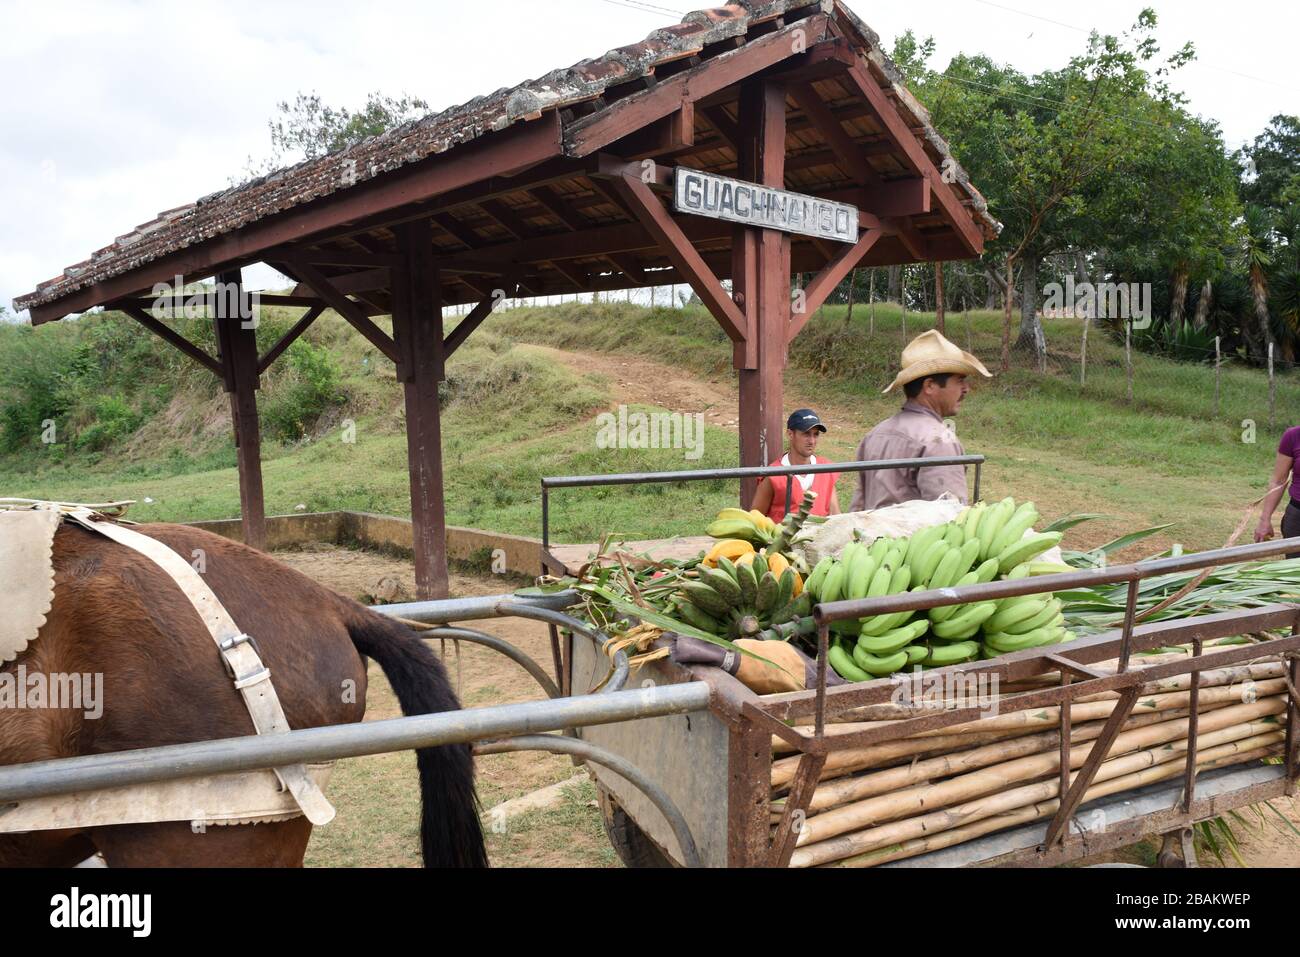 People, Men, Carriage, Fruits, train, 2014, Cuba Stock Photo